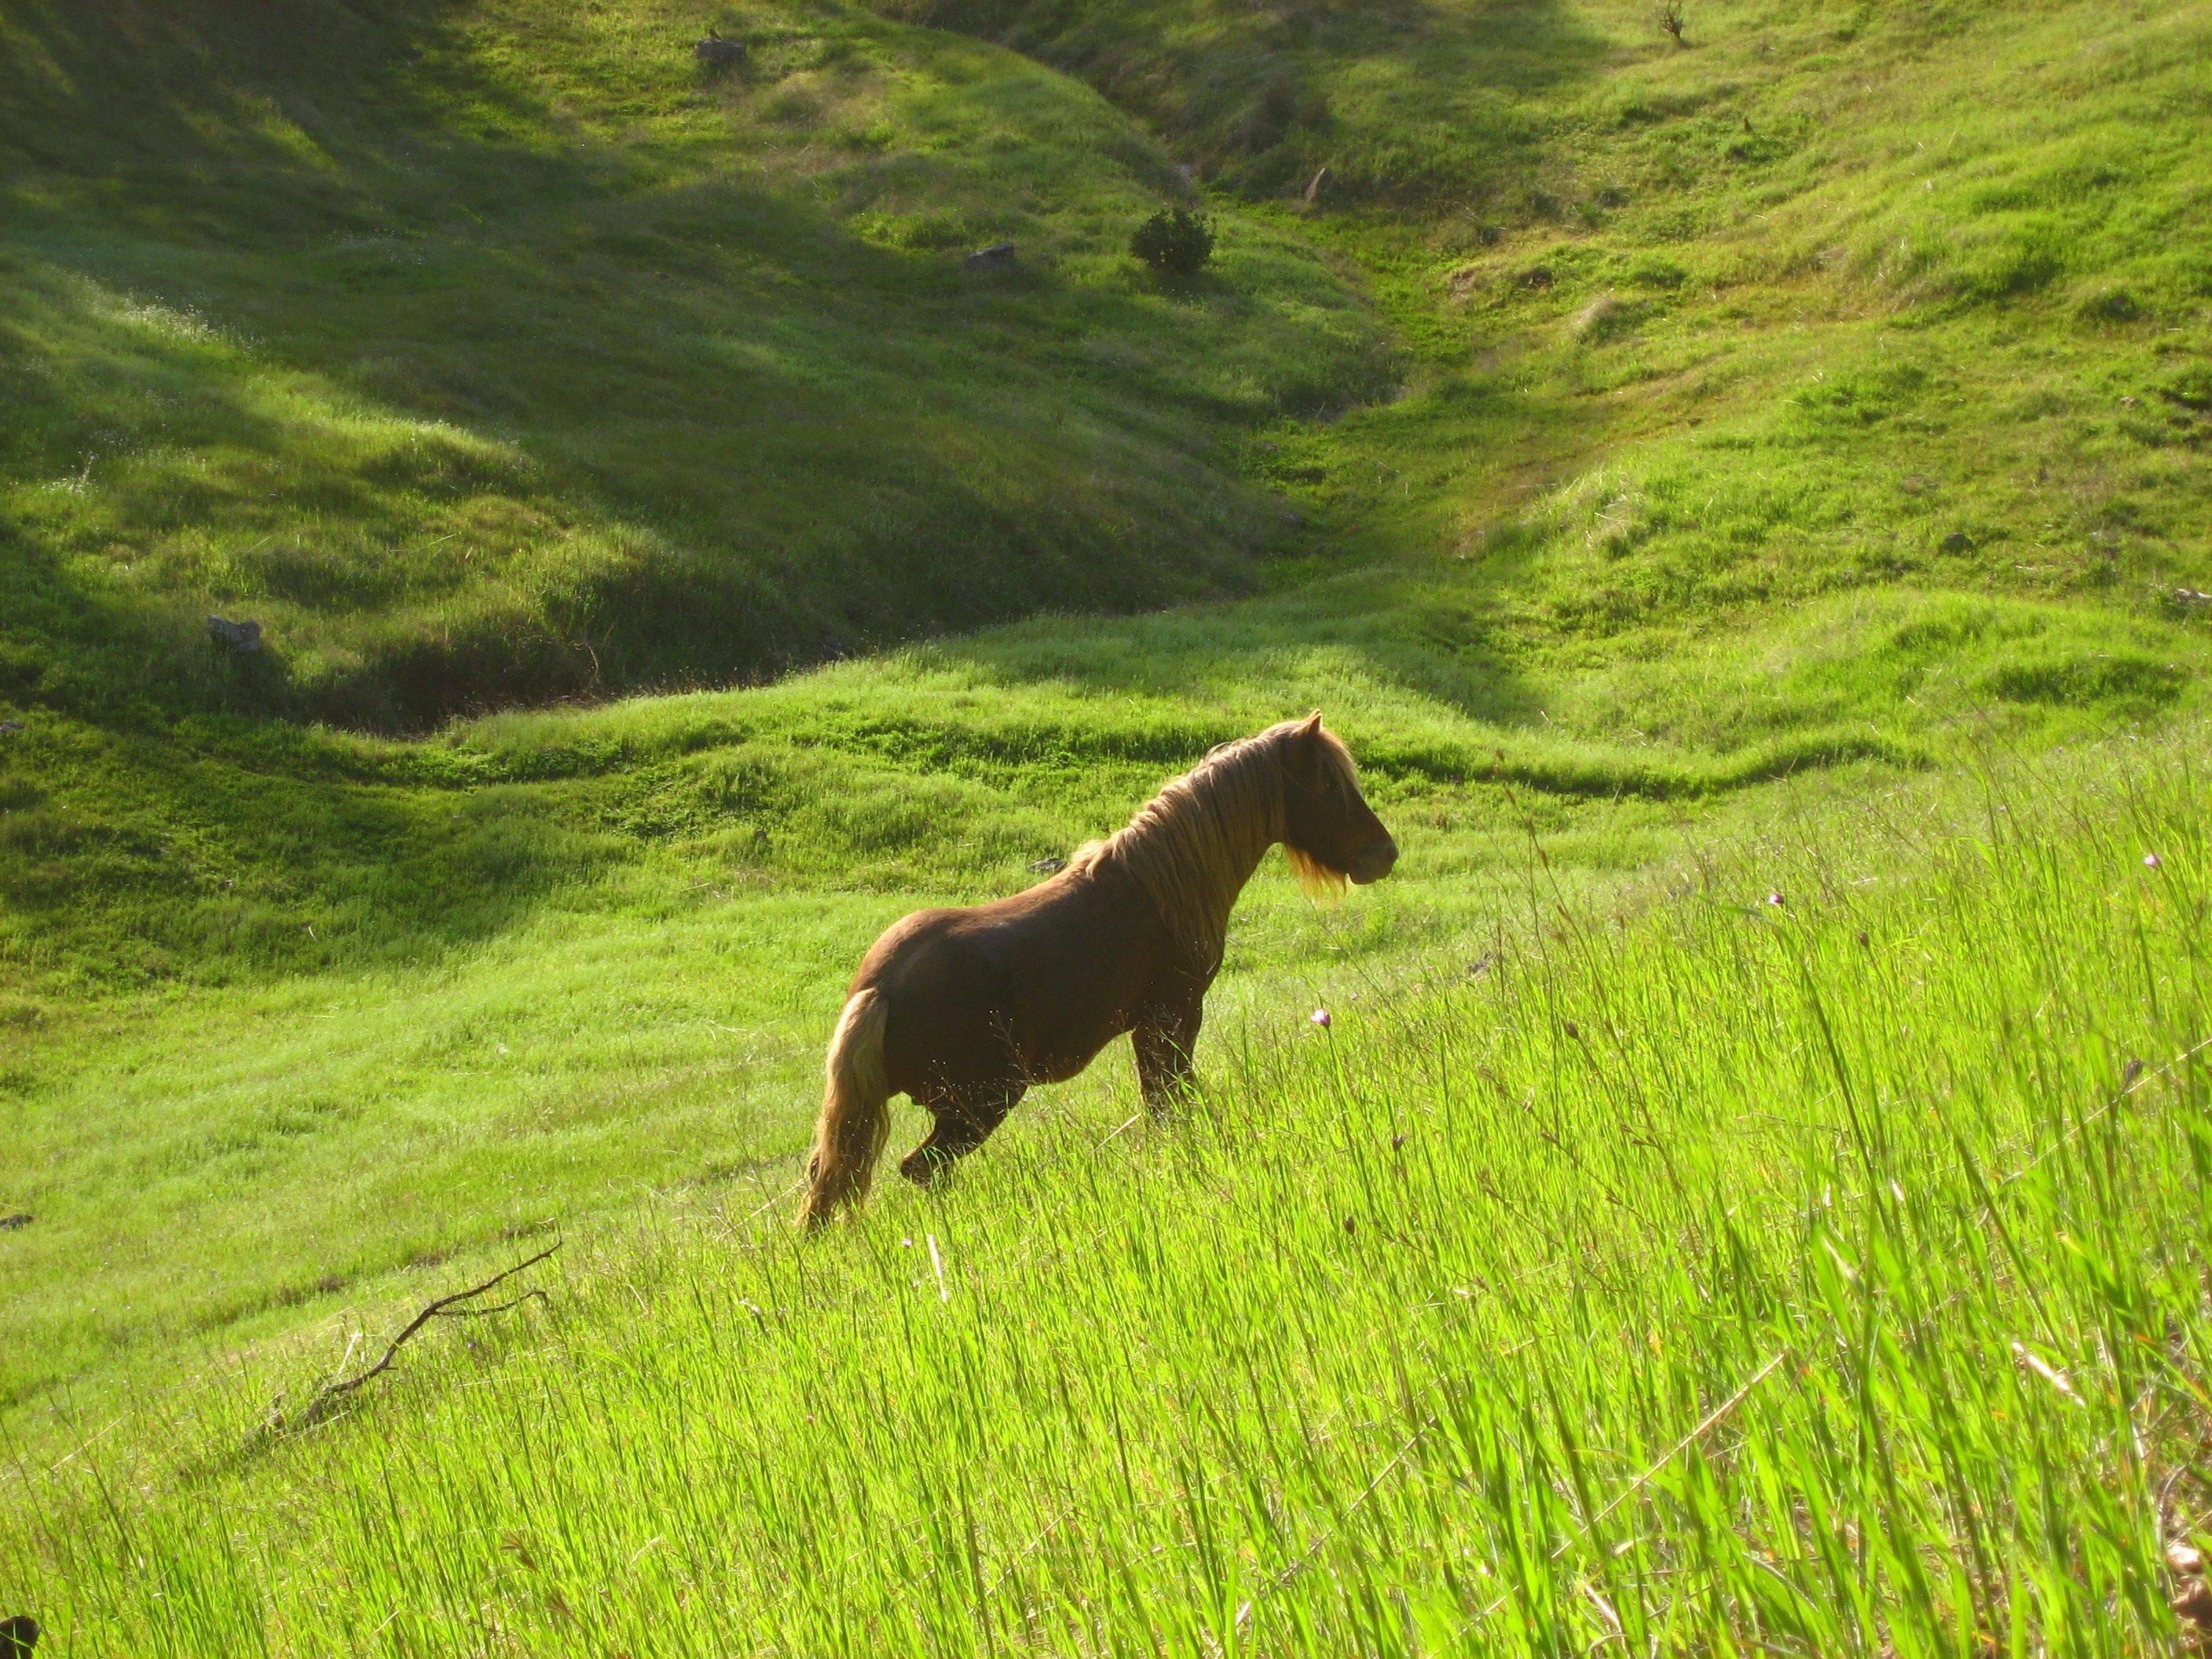 “Stallion in Green Meadow” Mendocino, California Landscape with Wild Pony - Photograph by Gaétan Caron